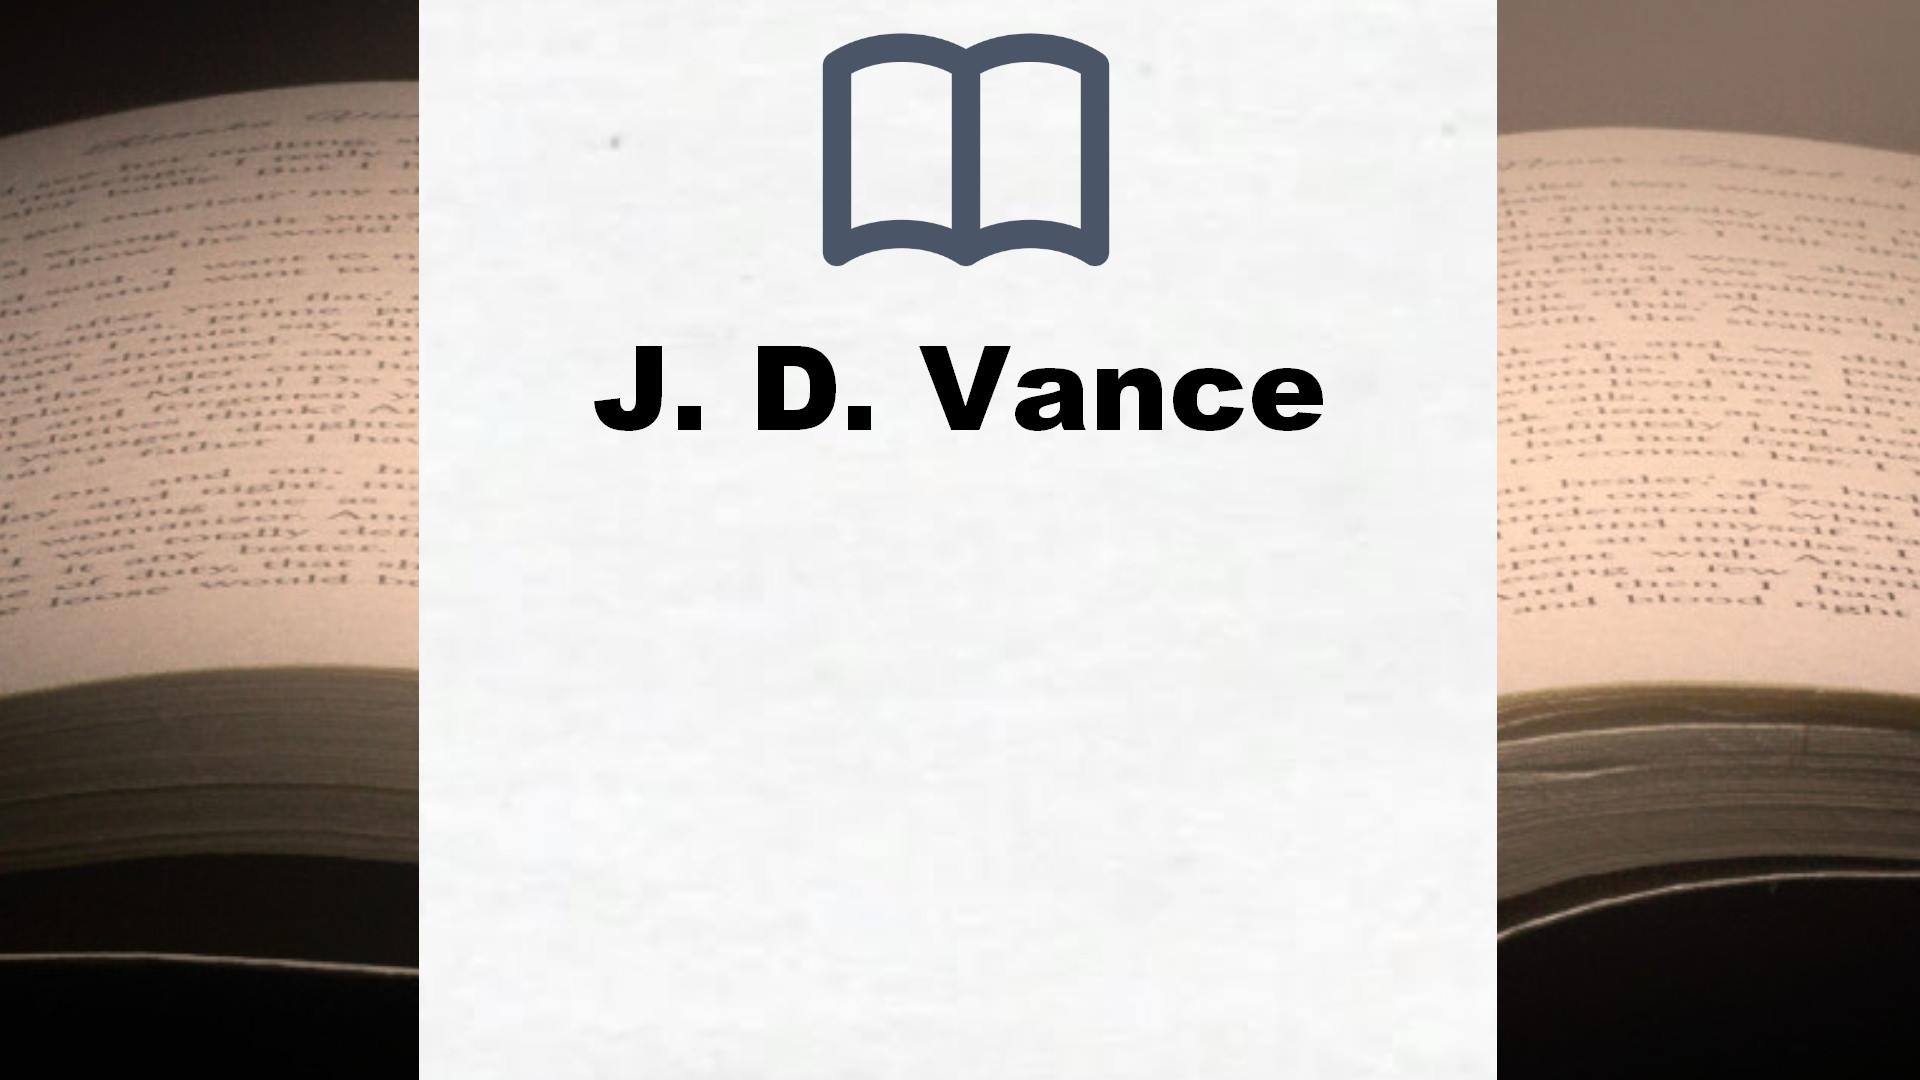 Libros J. D. Vance